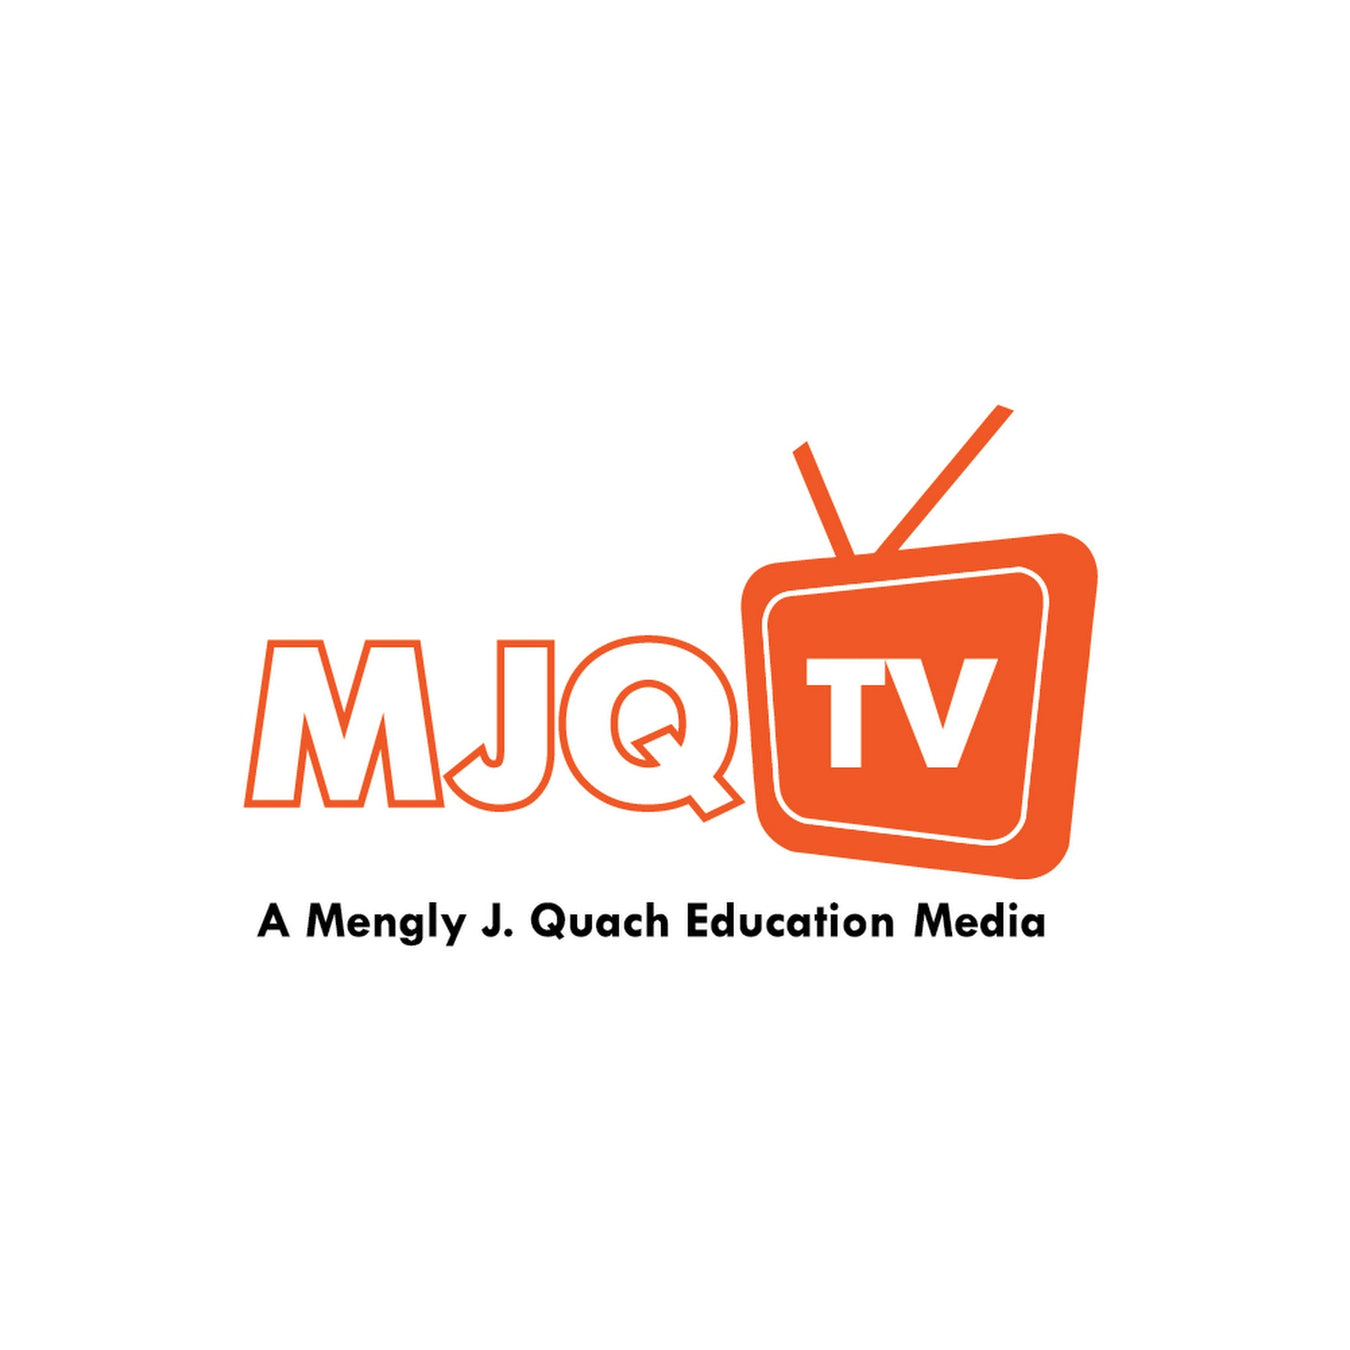 MJQTV